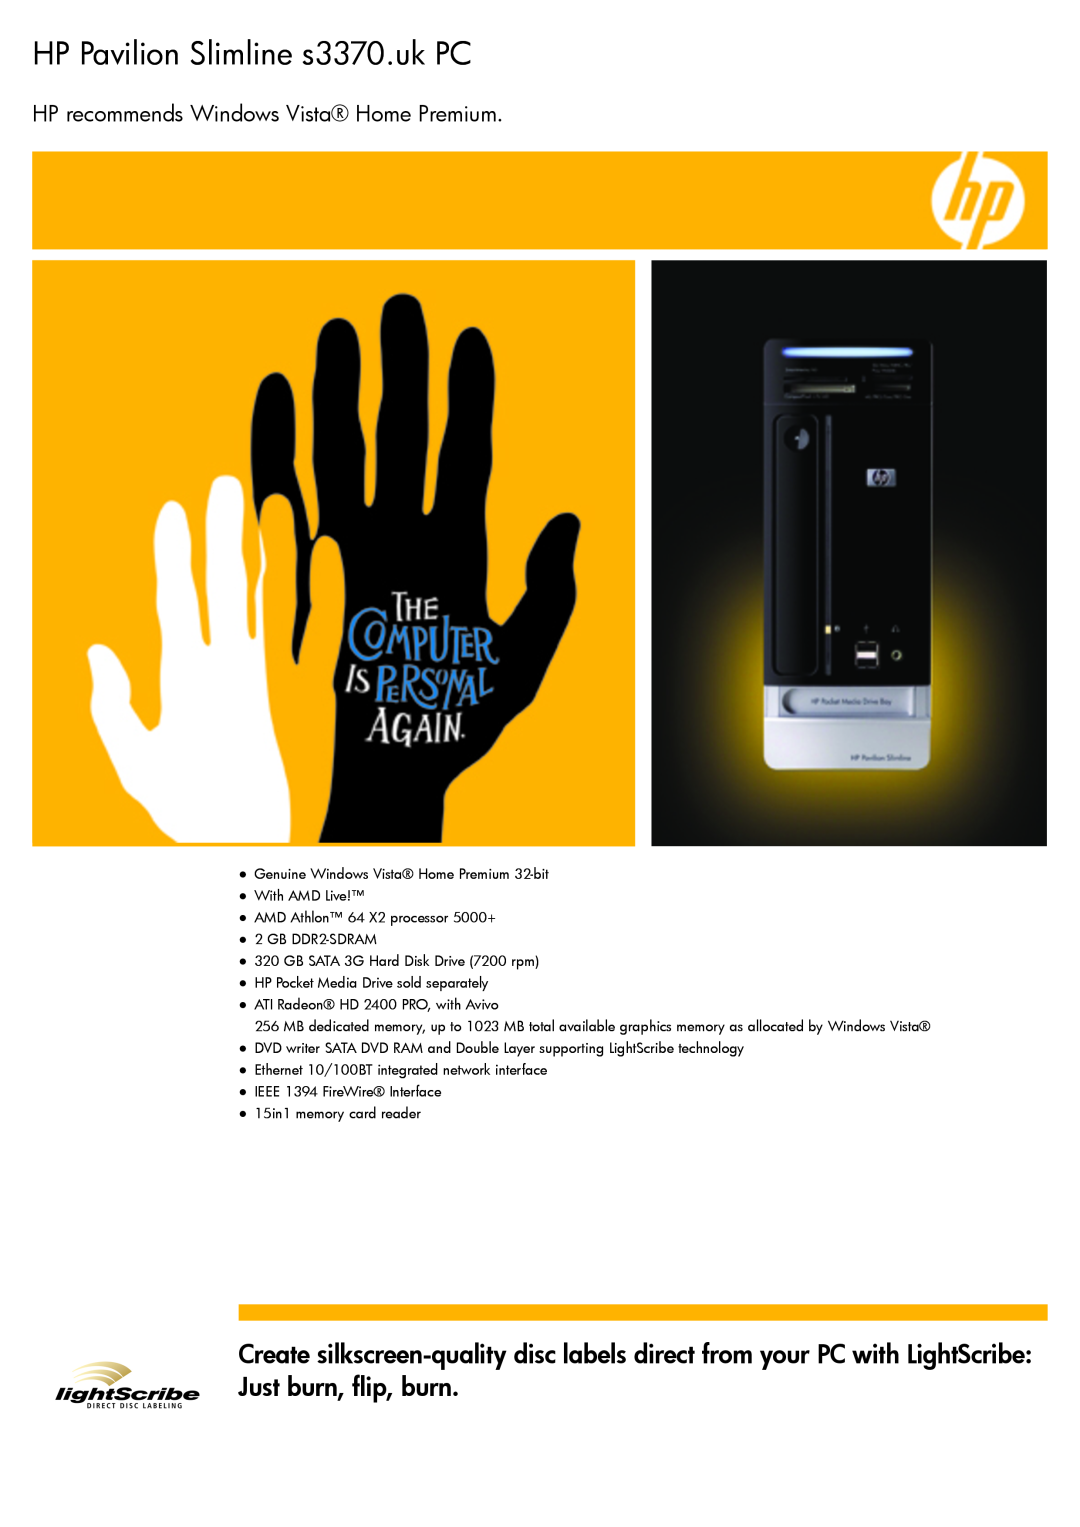 BT manual HP Pavilion Slimline s3370.uk PC, HP recommends Windows Vista Home Premium 